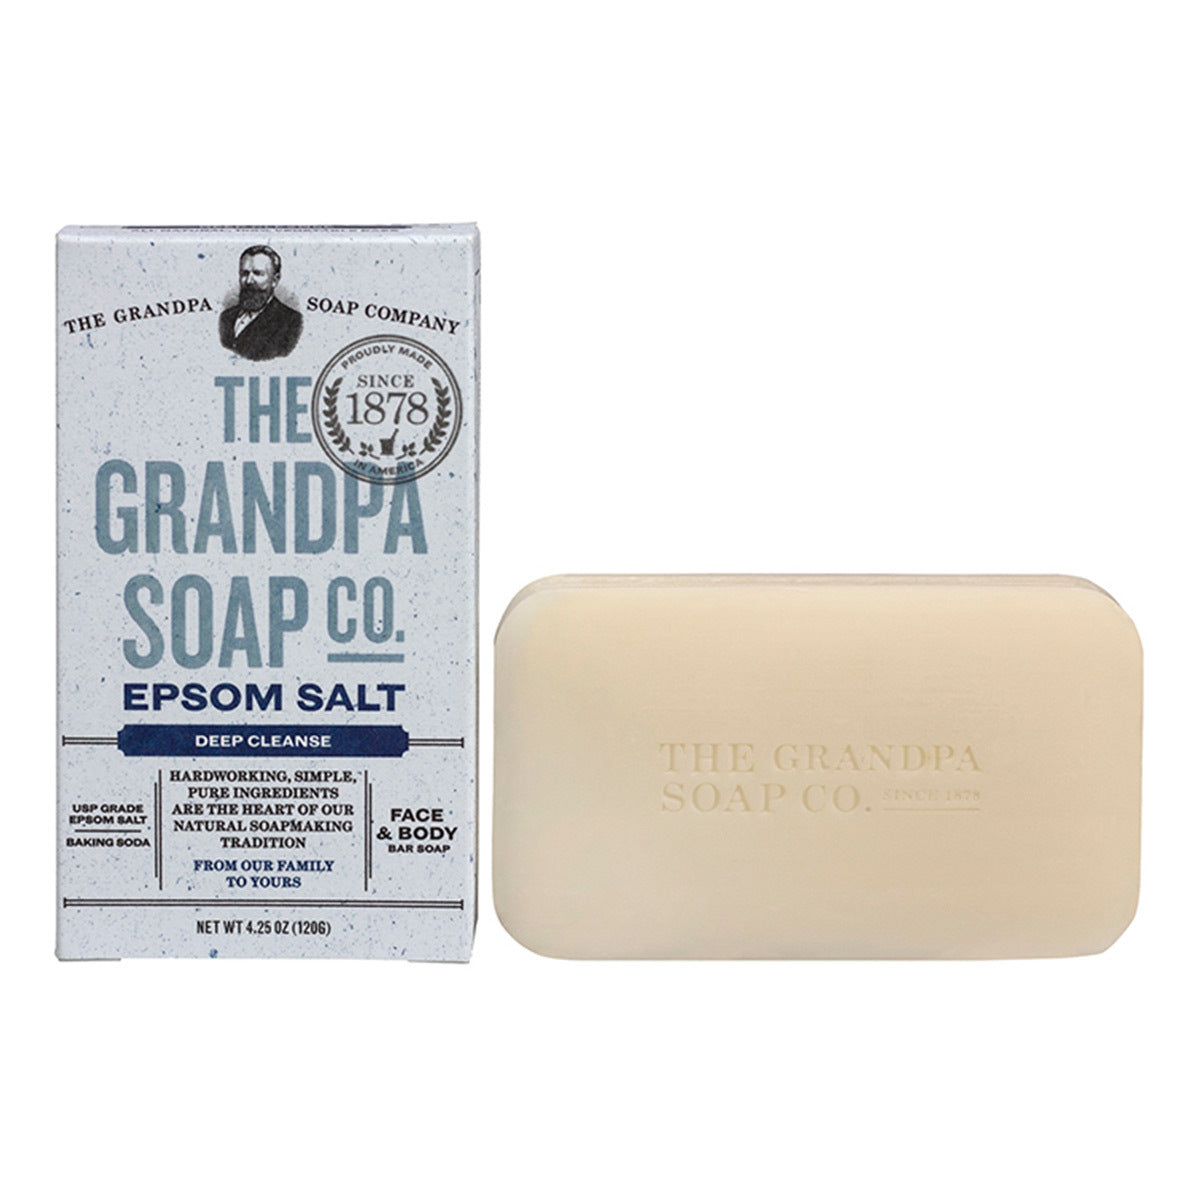 Primary image of Epsom Salt Bar Soap